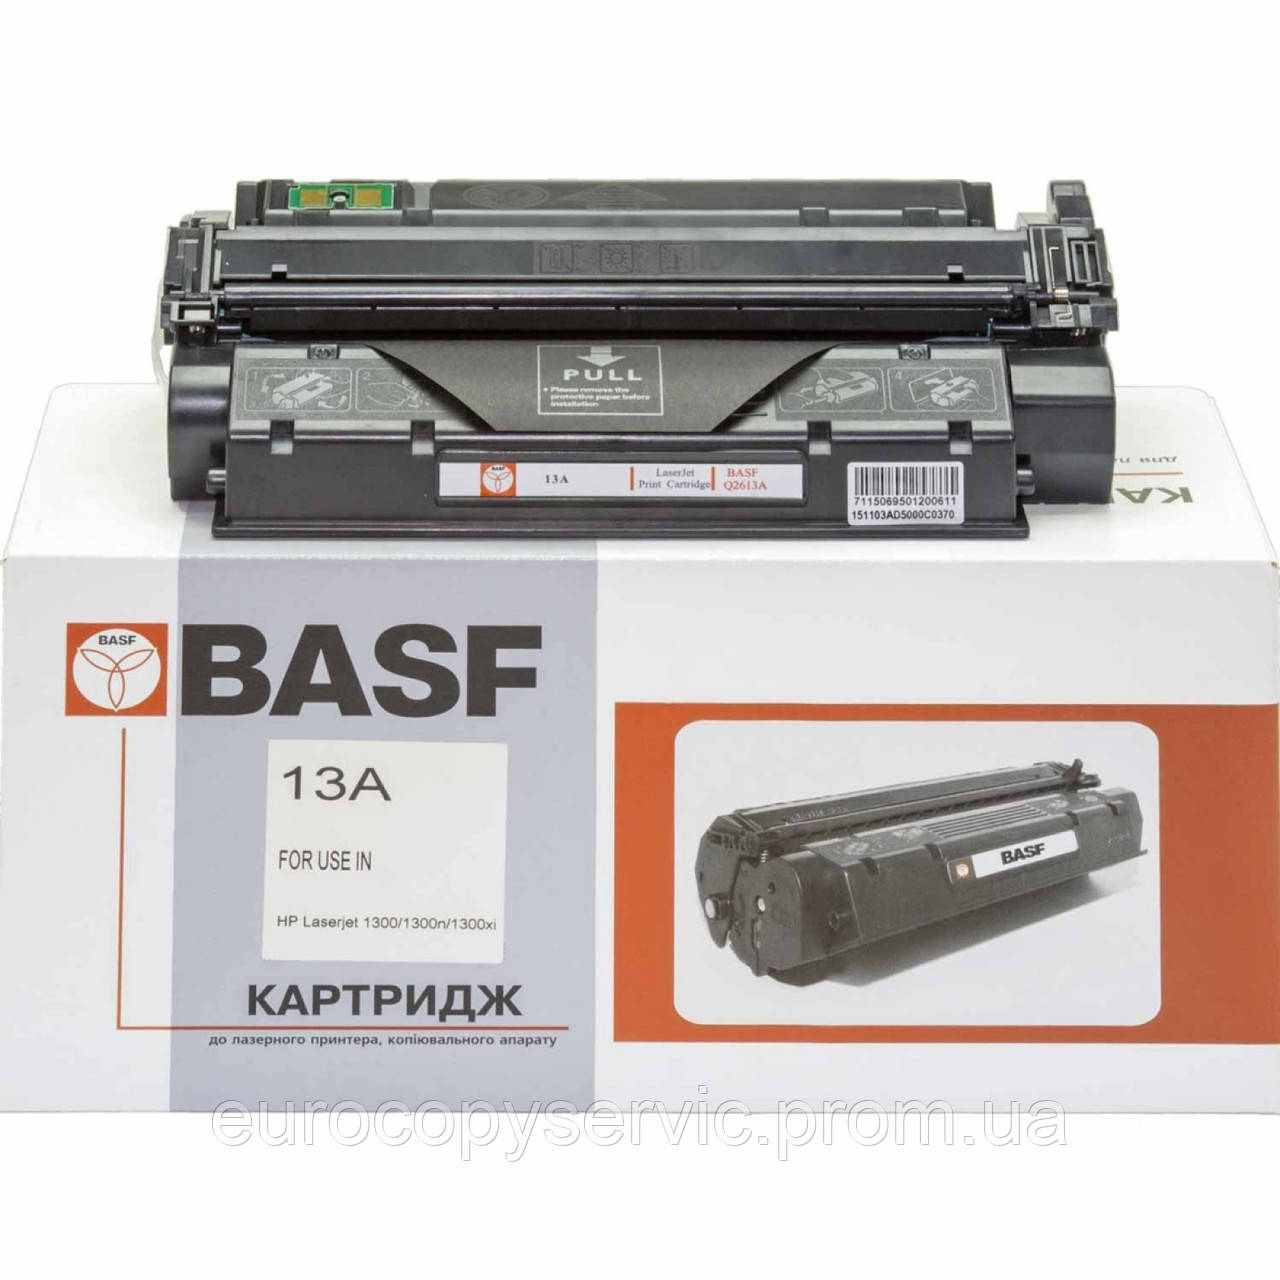 Тонер-картридж BASF для HP LaserJet 1300 / 1300n аналог Q2613A Black (BASF-KT-Q2613A)